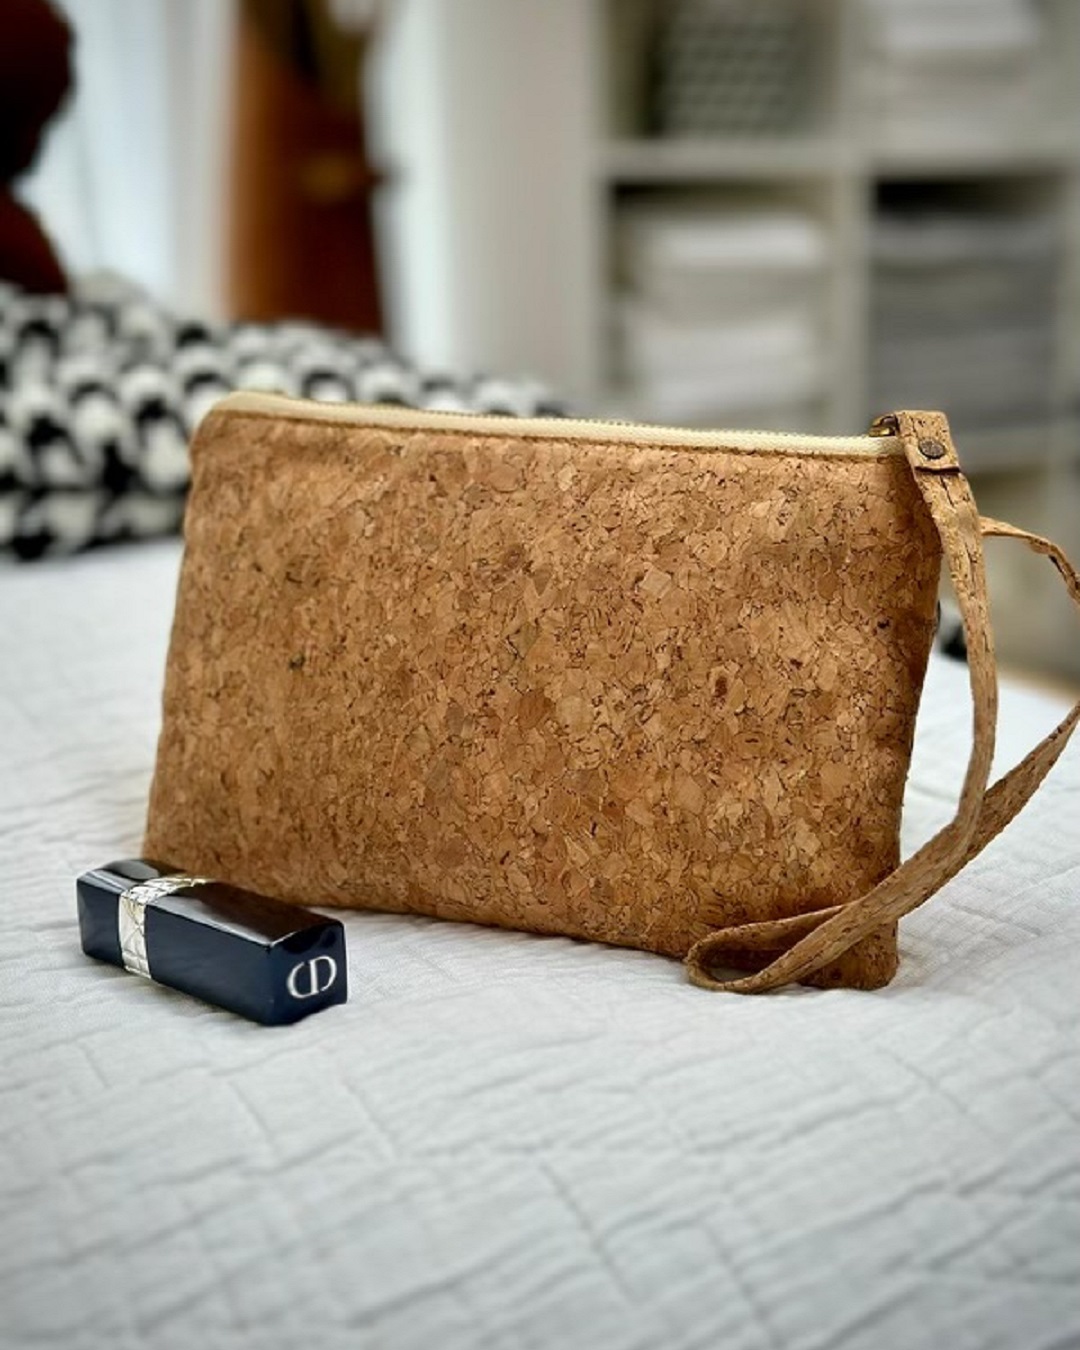 cork purse on bed